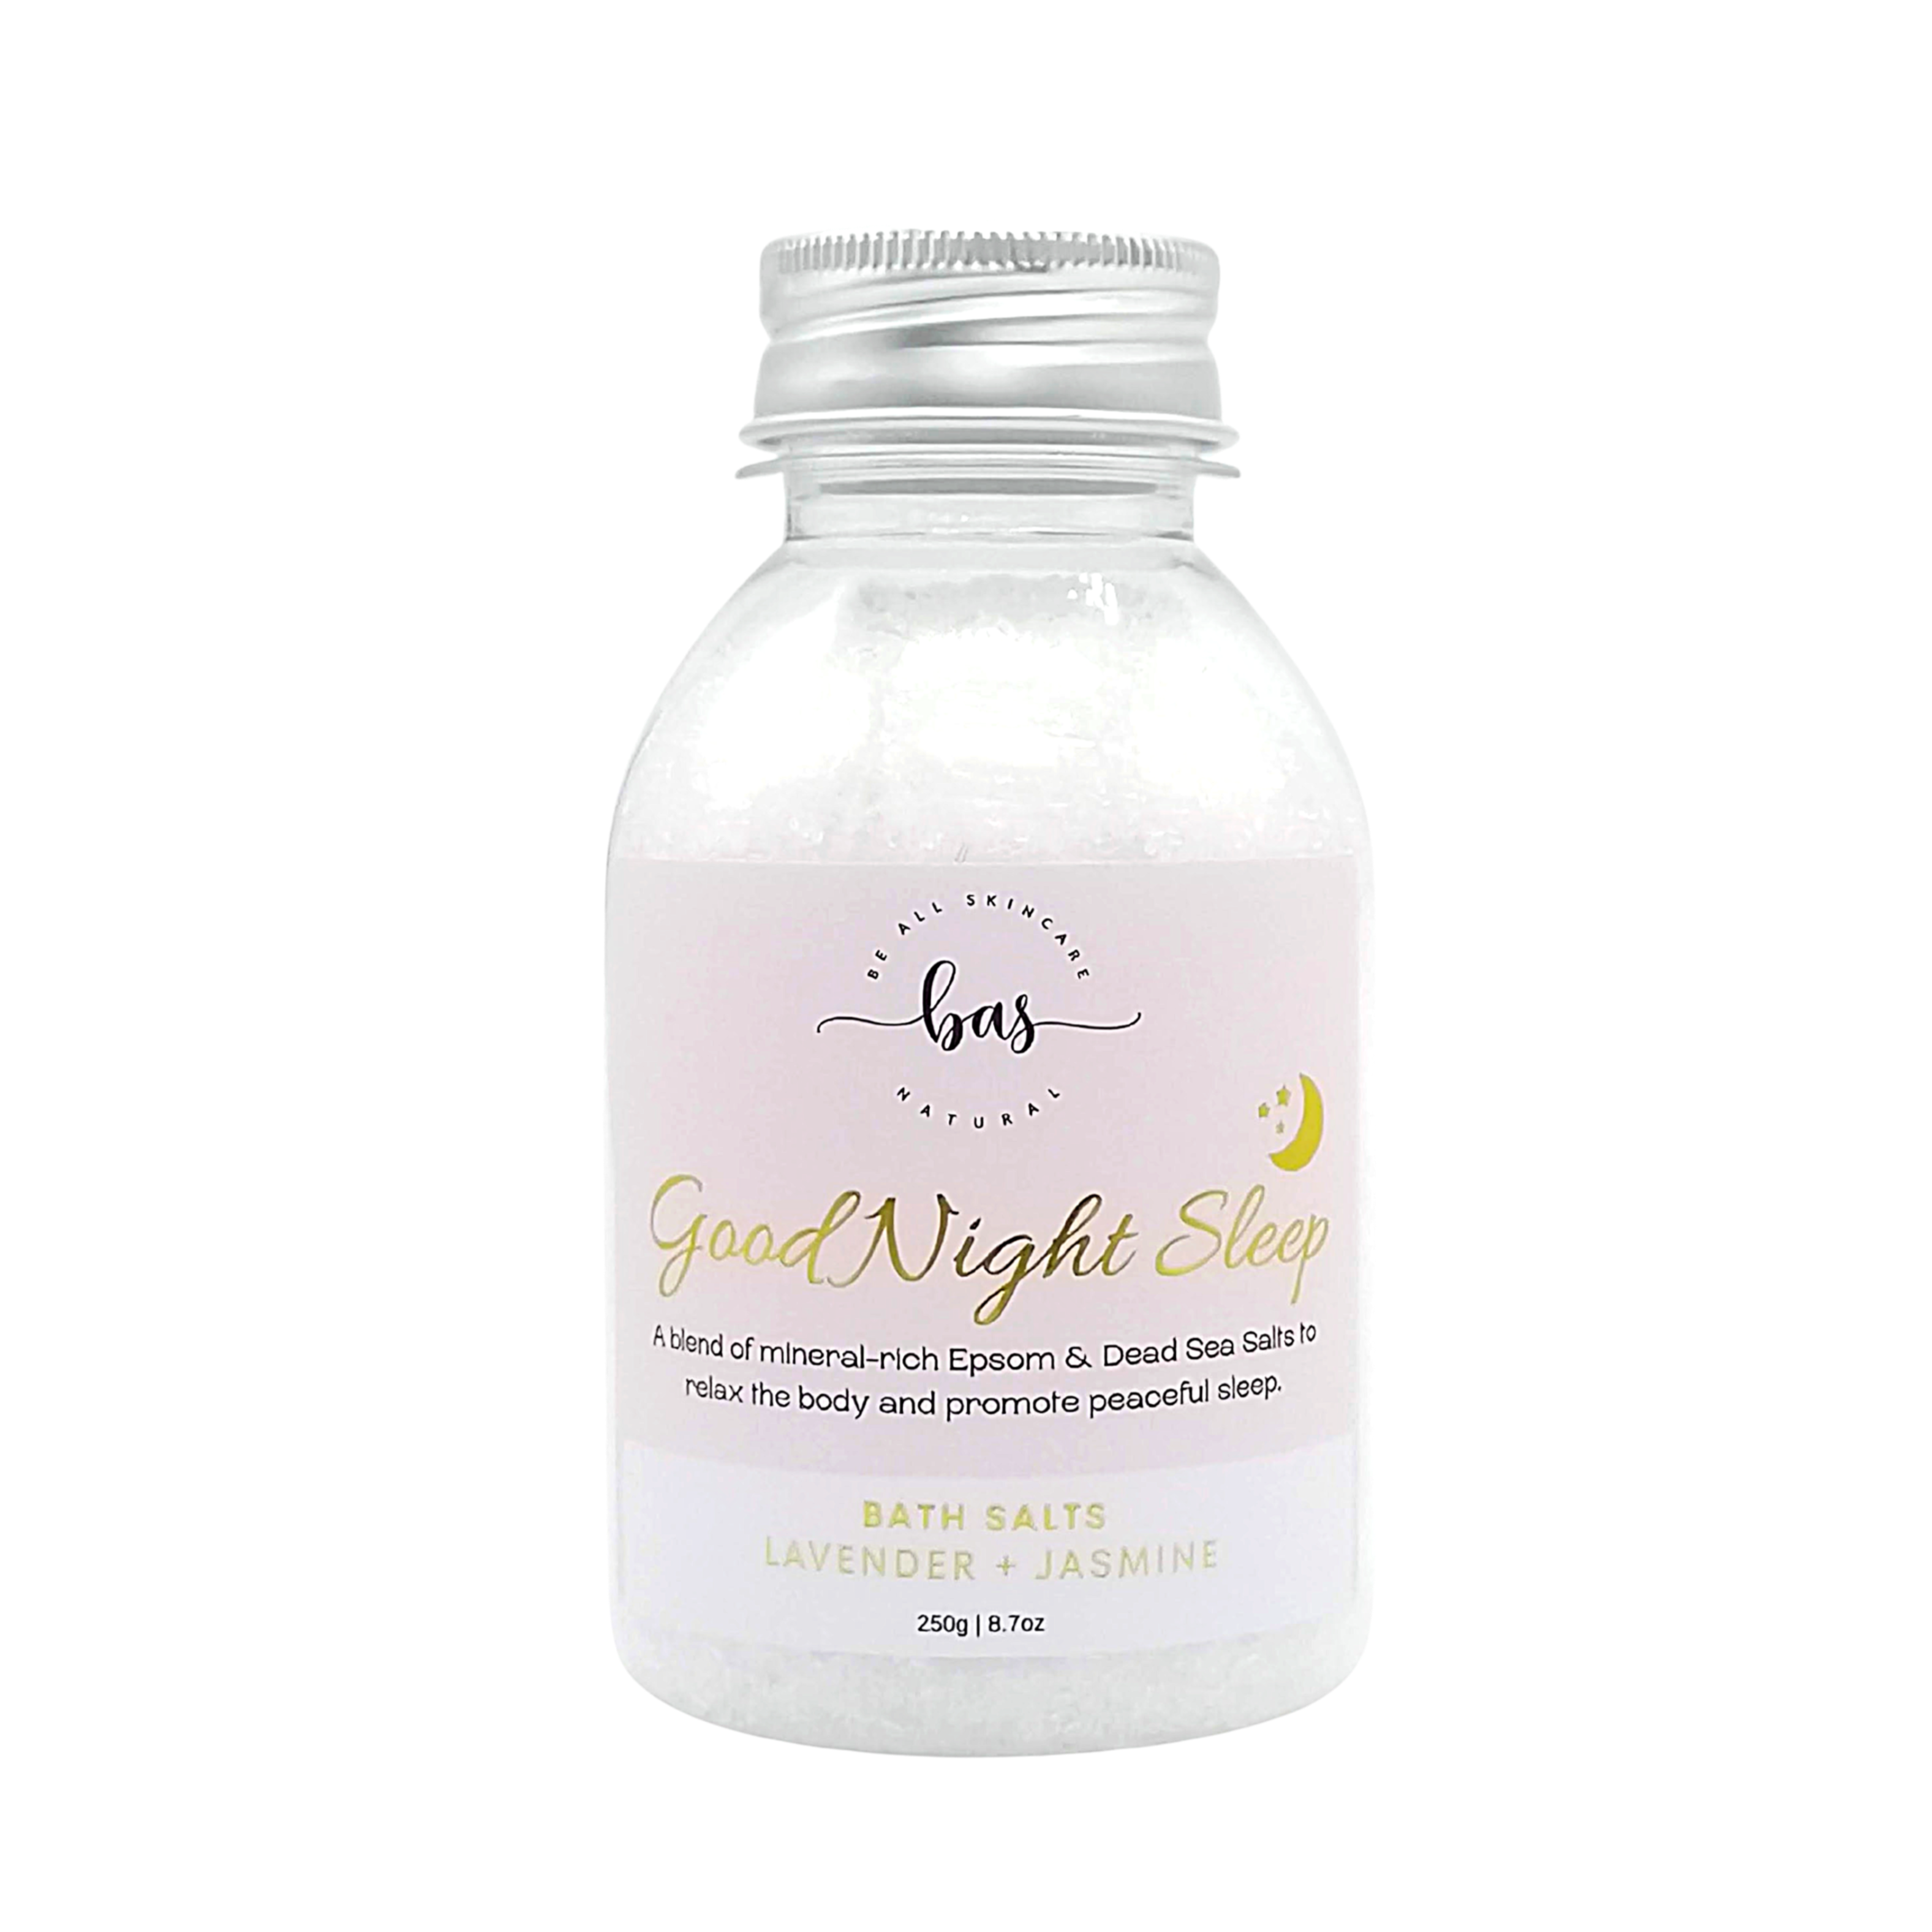 Be All Skincare - "Good Night Sleep" Bath Salts